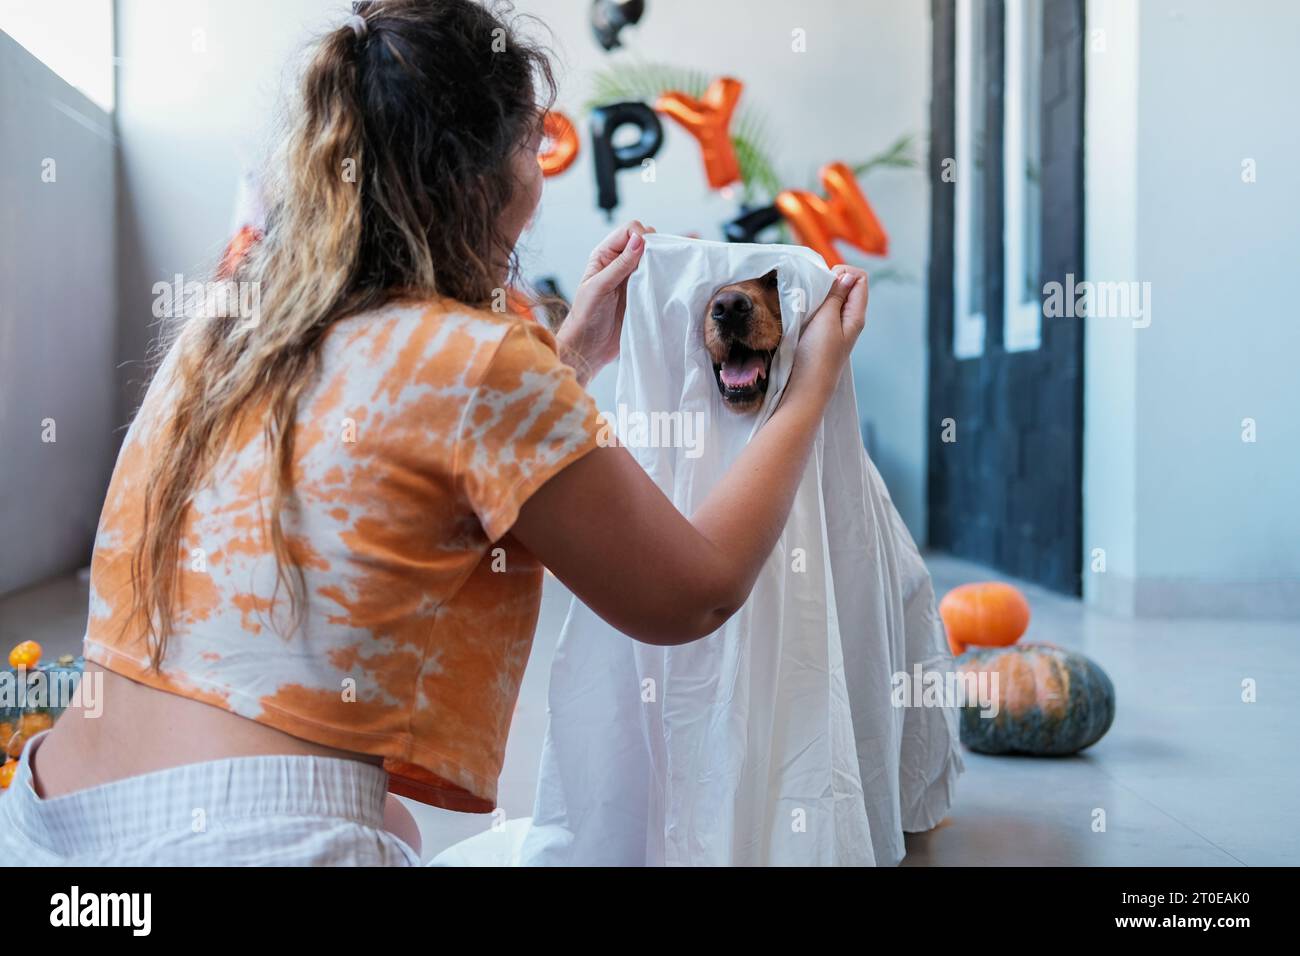 Creativo disfraz de halloween para un adulto un fantasma de una sábana  blanca con gafas de sol negras bailando en un campo de otoño concepto de  truco o trato